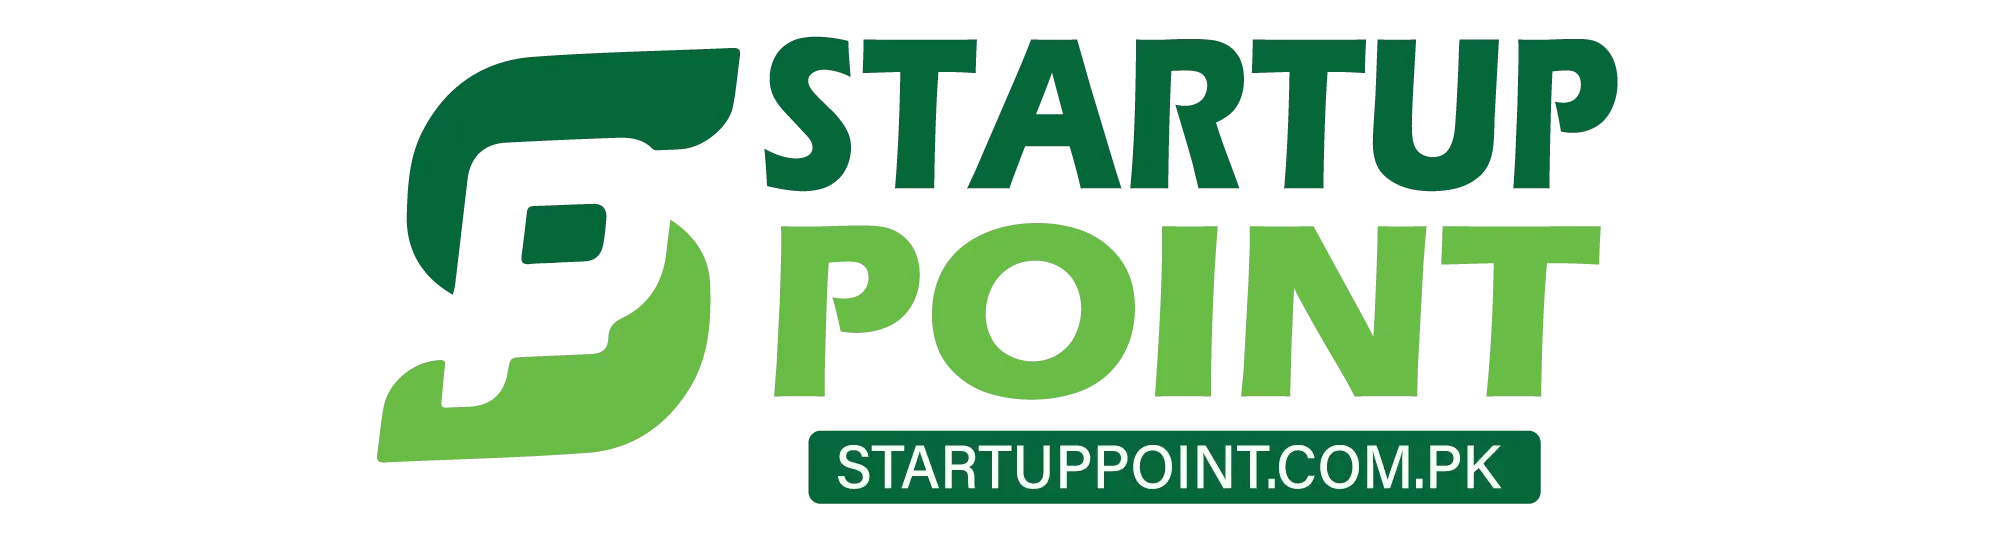 Startuppoint.com.pk